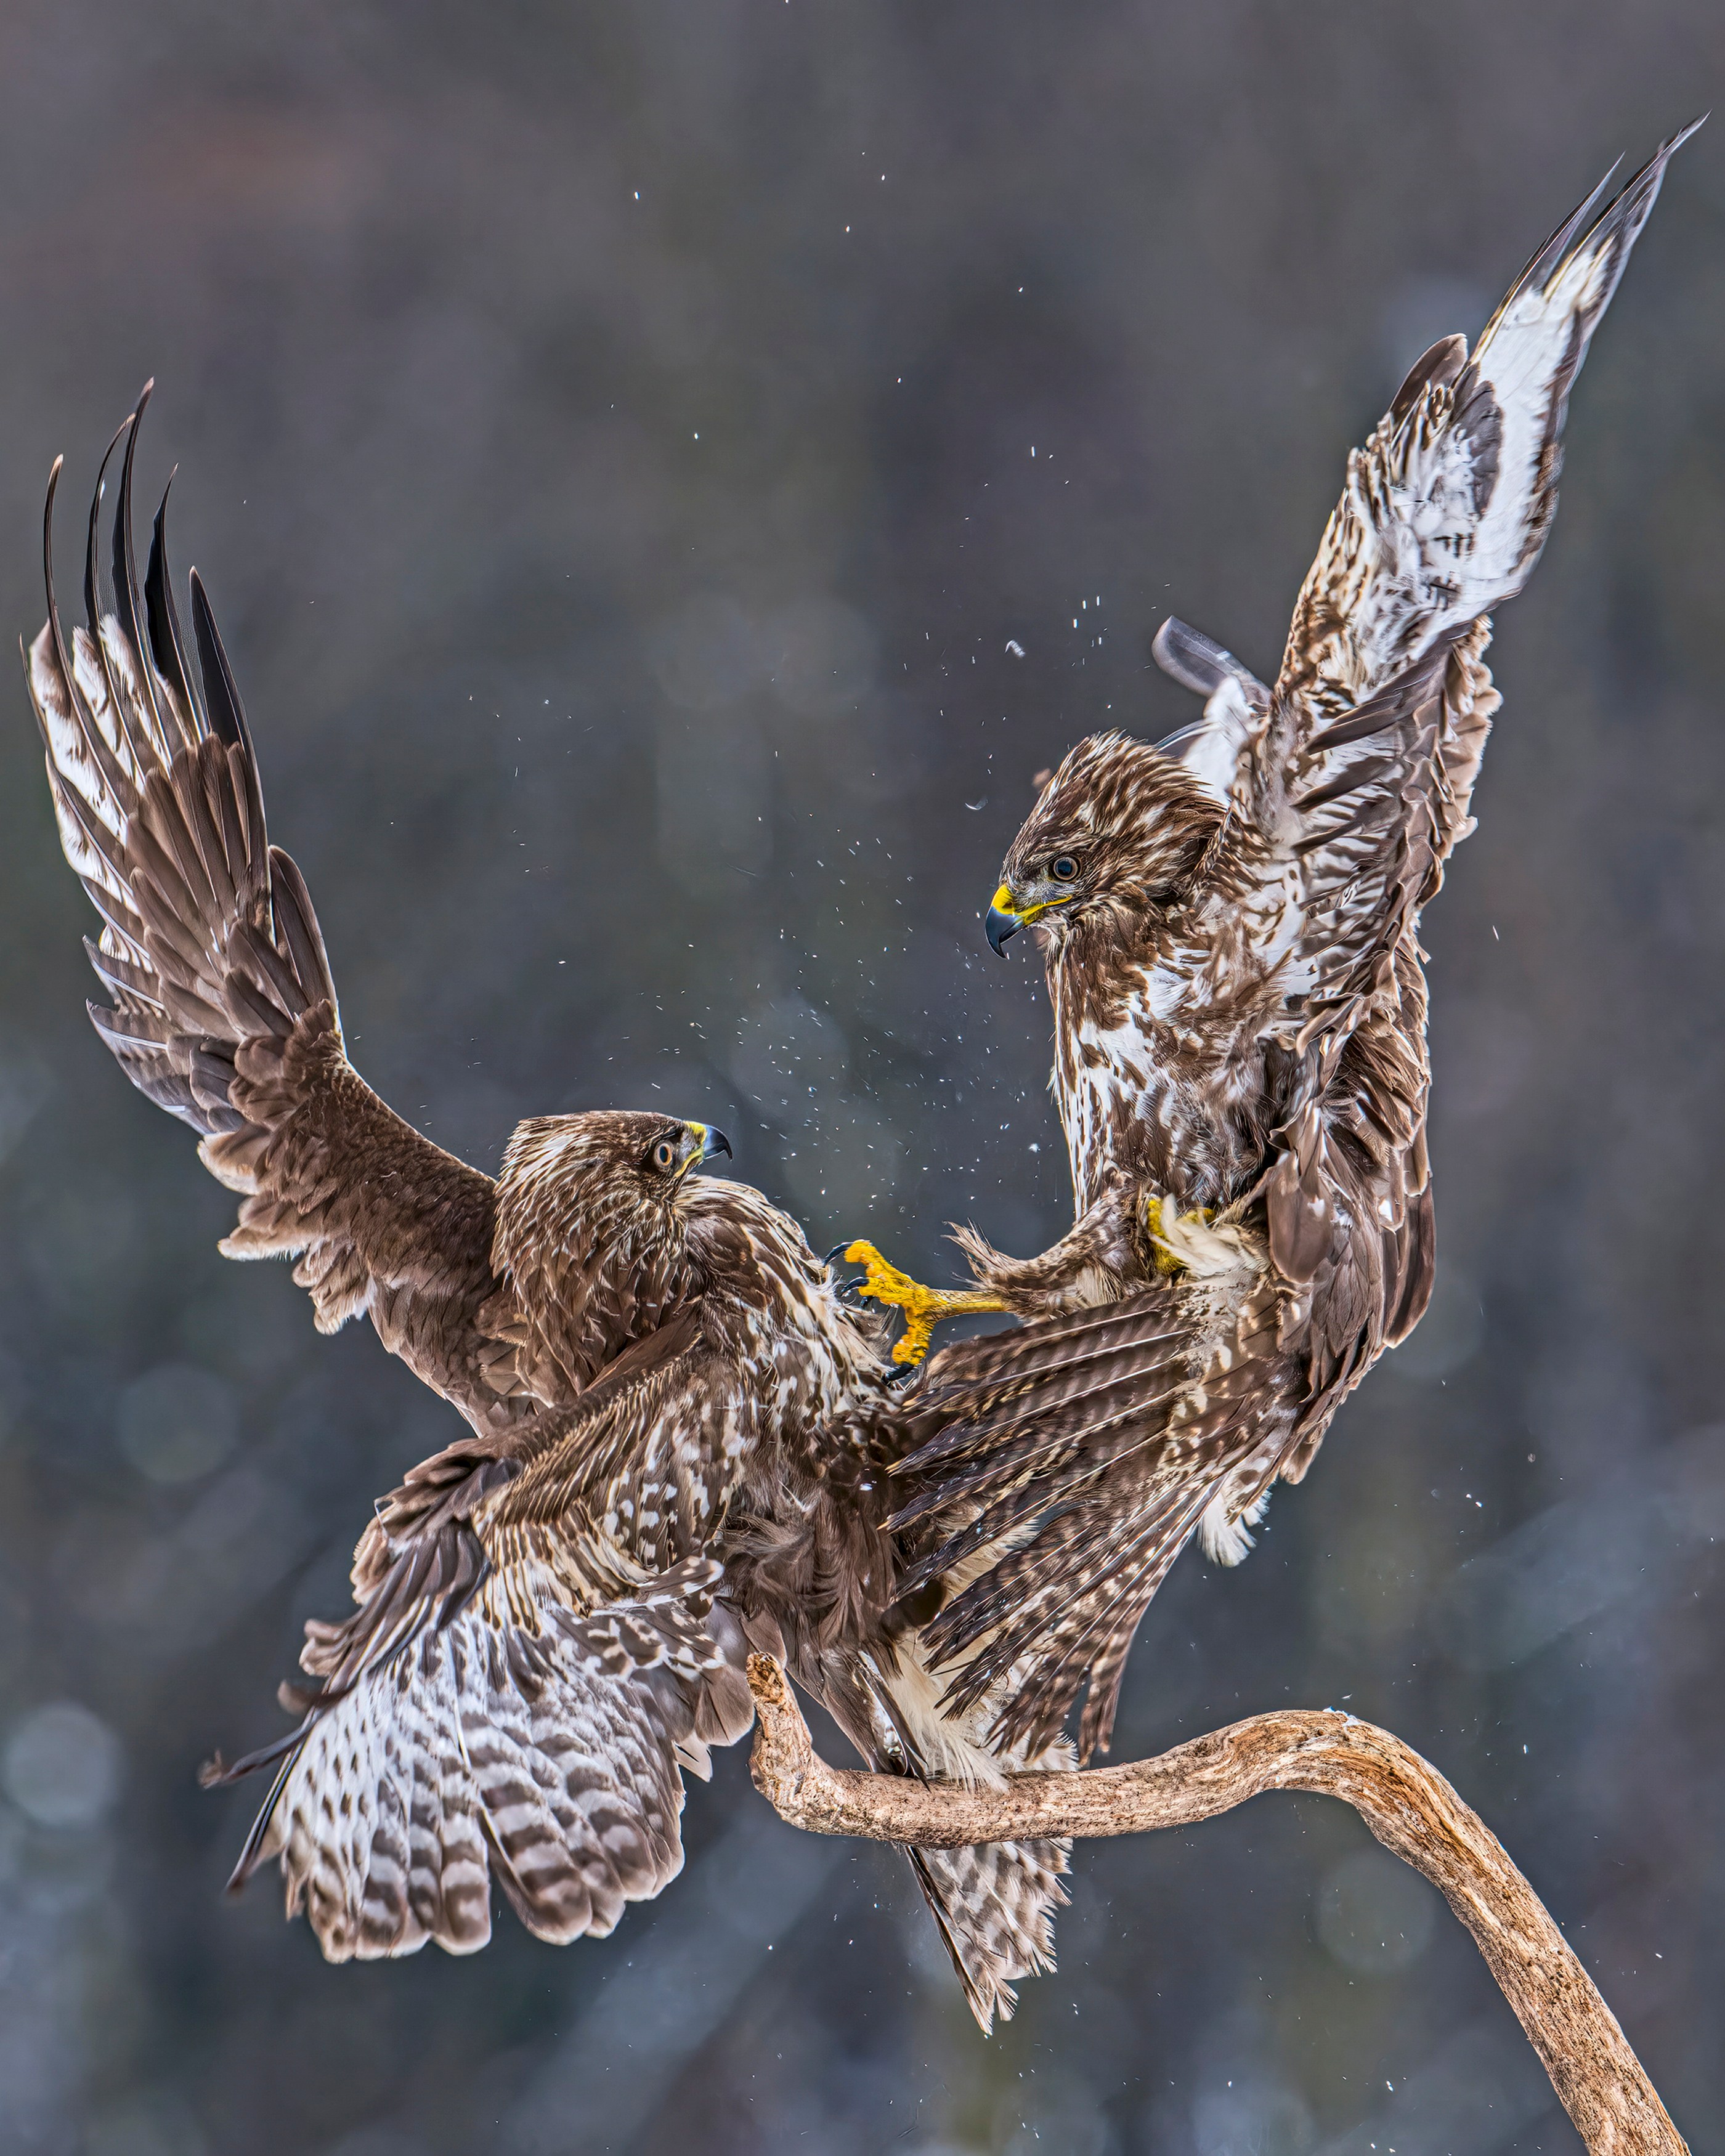 Two buzzards squabble over food in the White Carpathian Mountains, Czech Republic